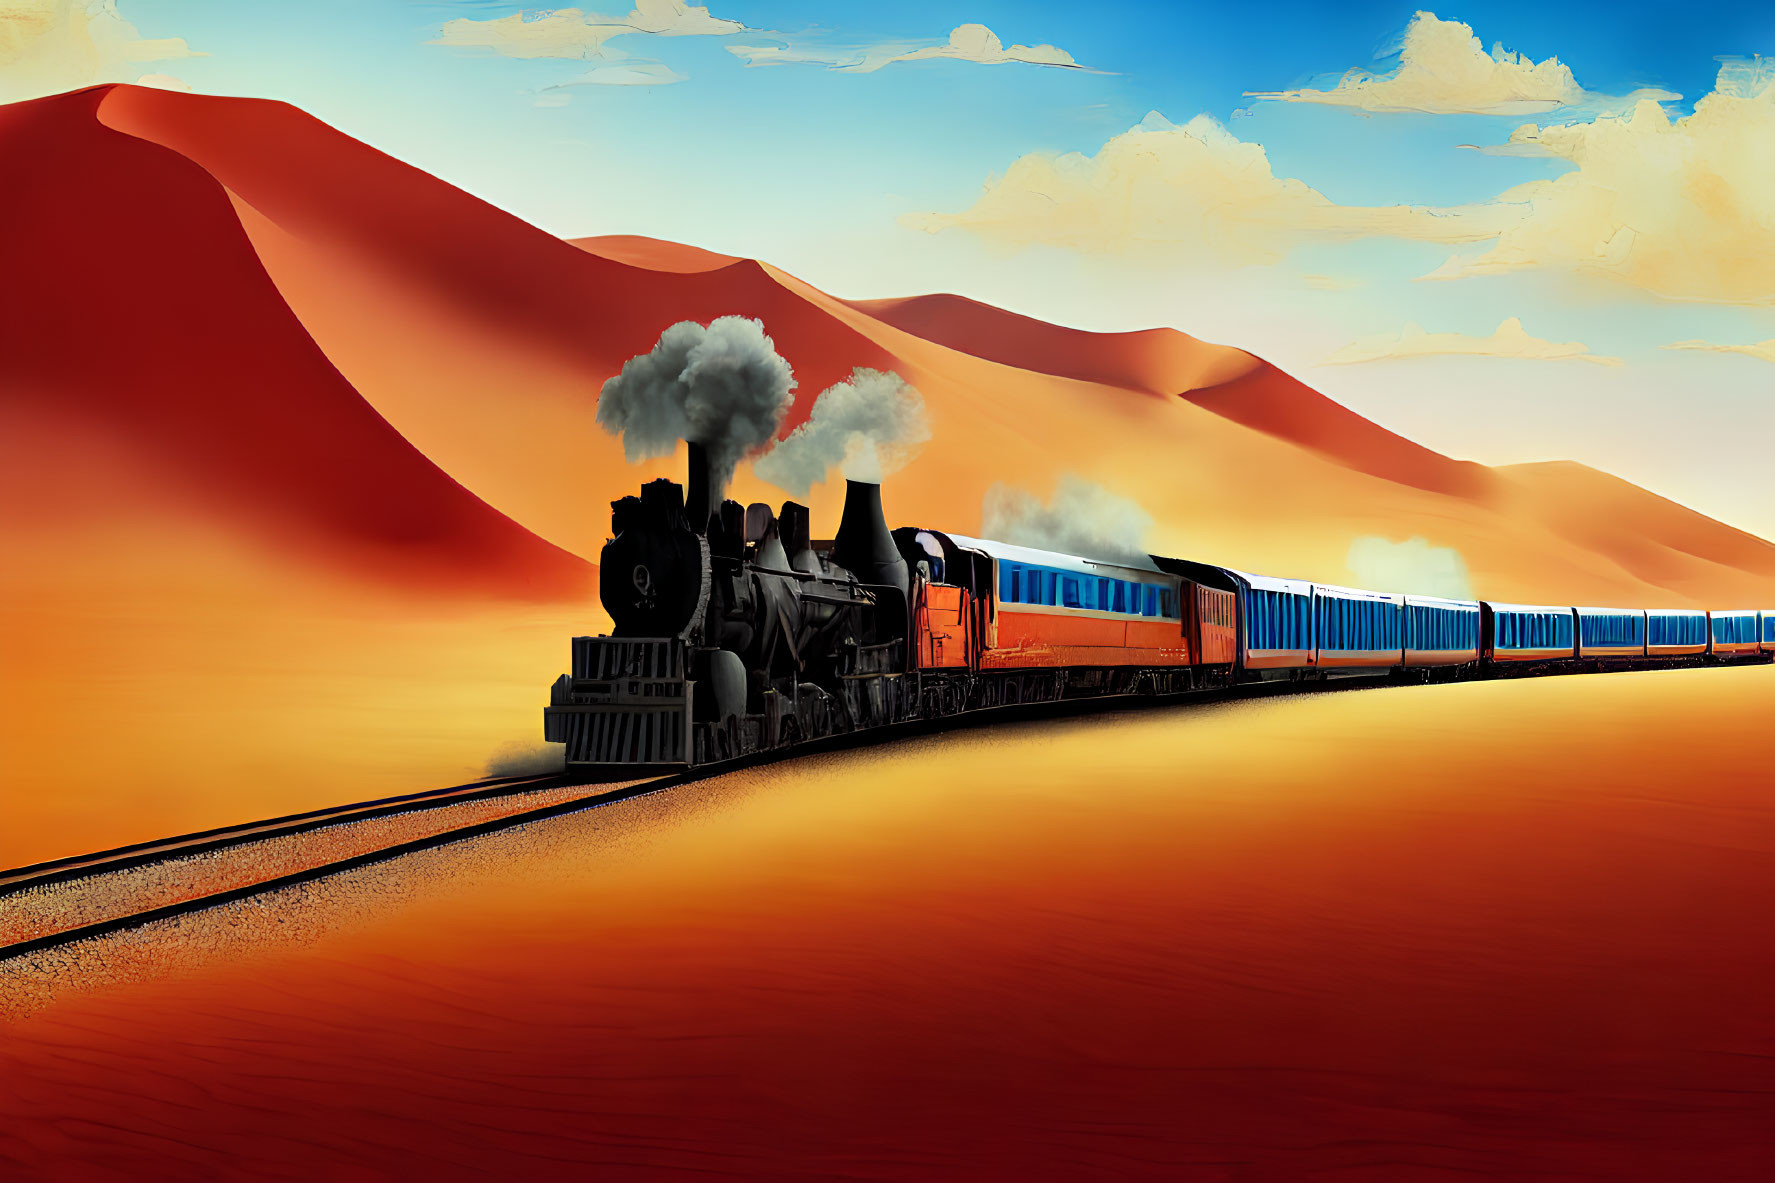 Vintage steam train in red-orange desert landscape with blue carriages